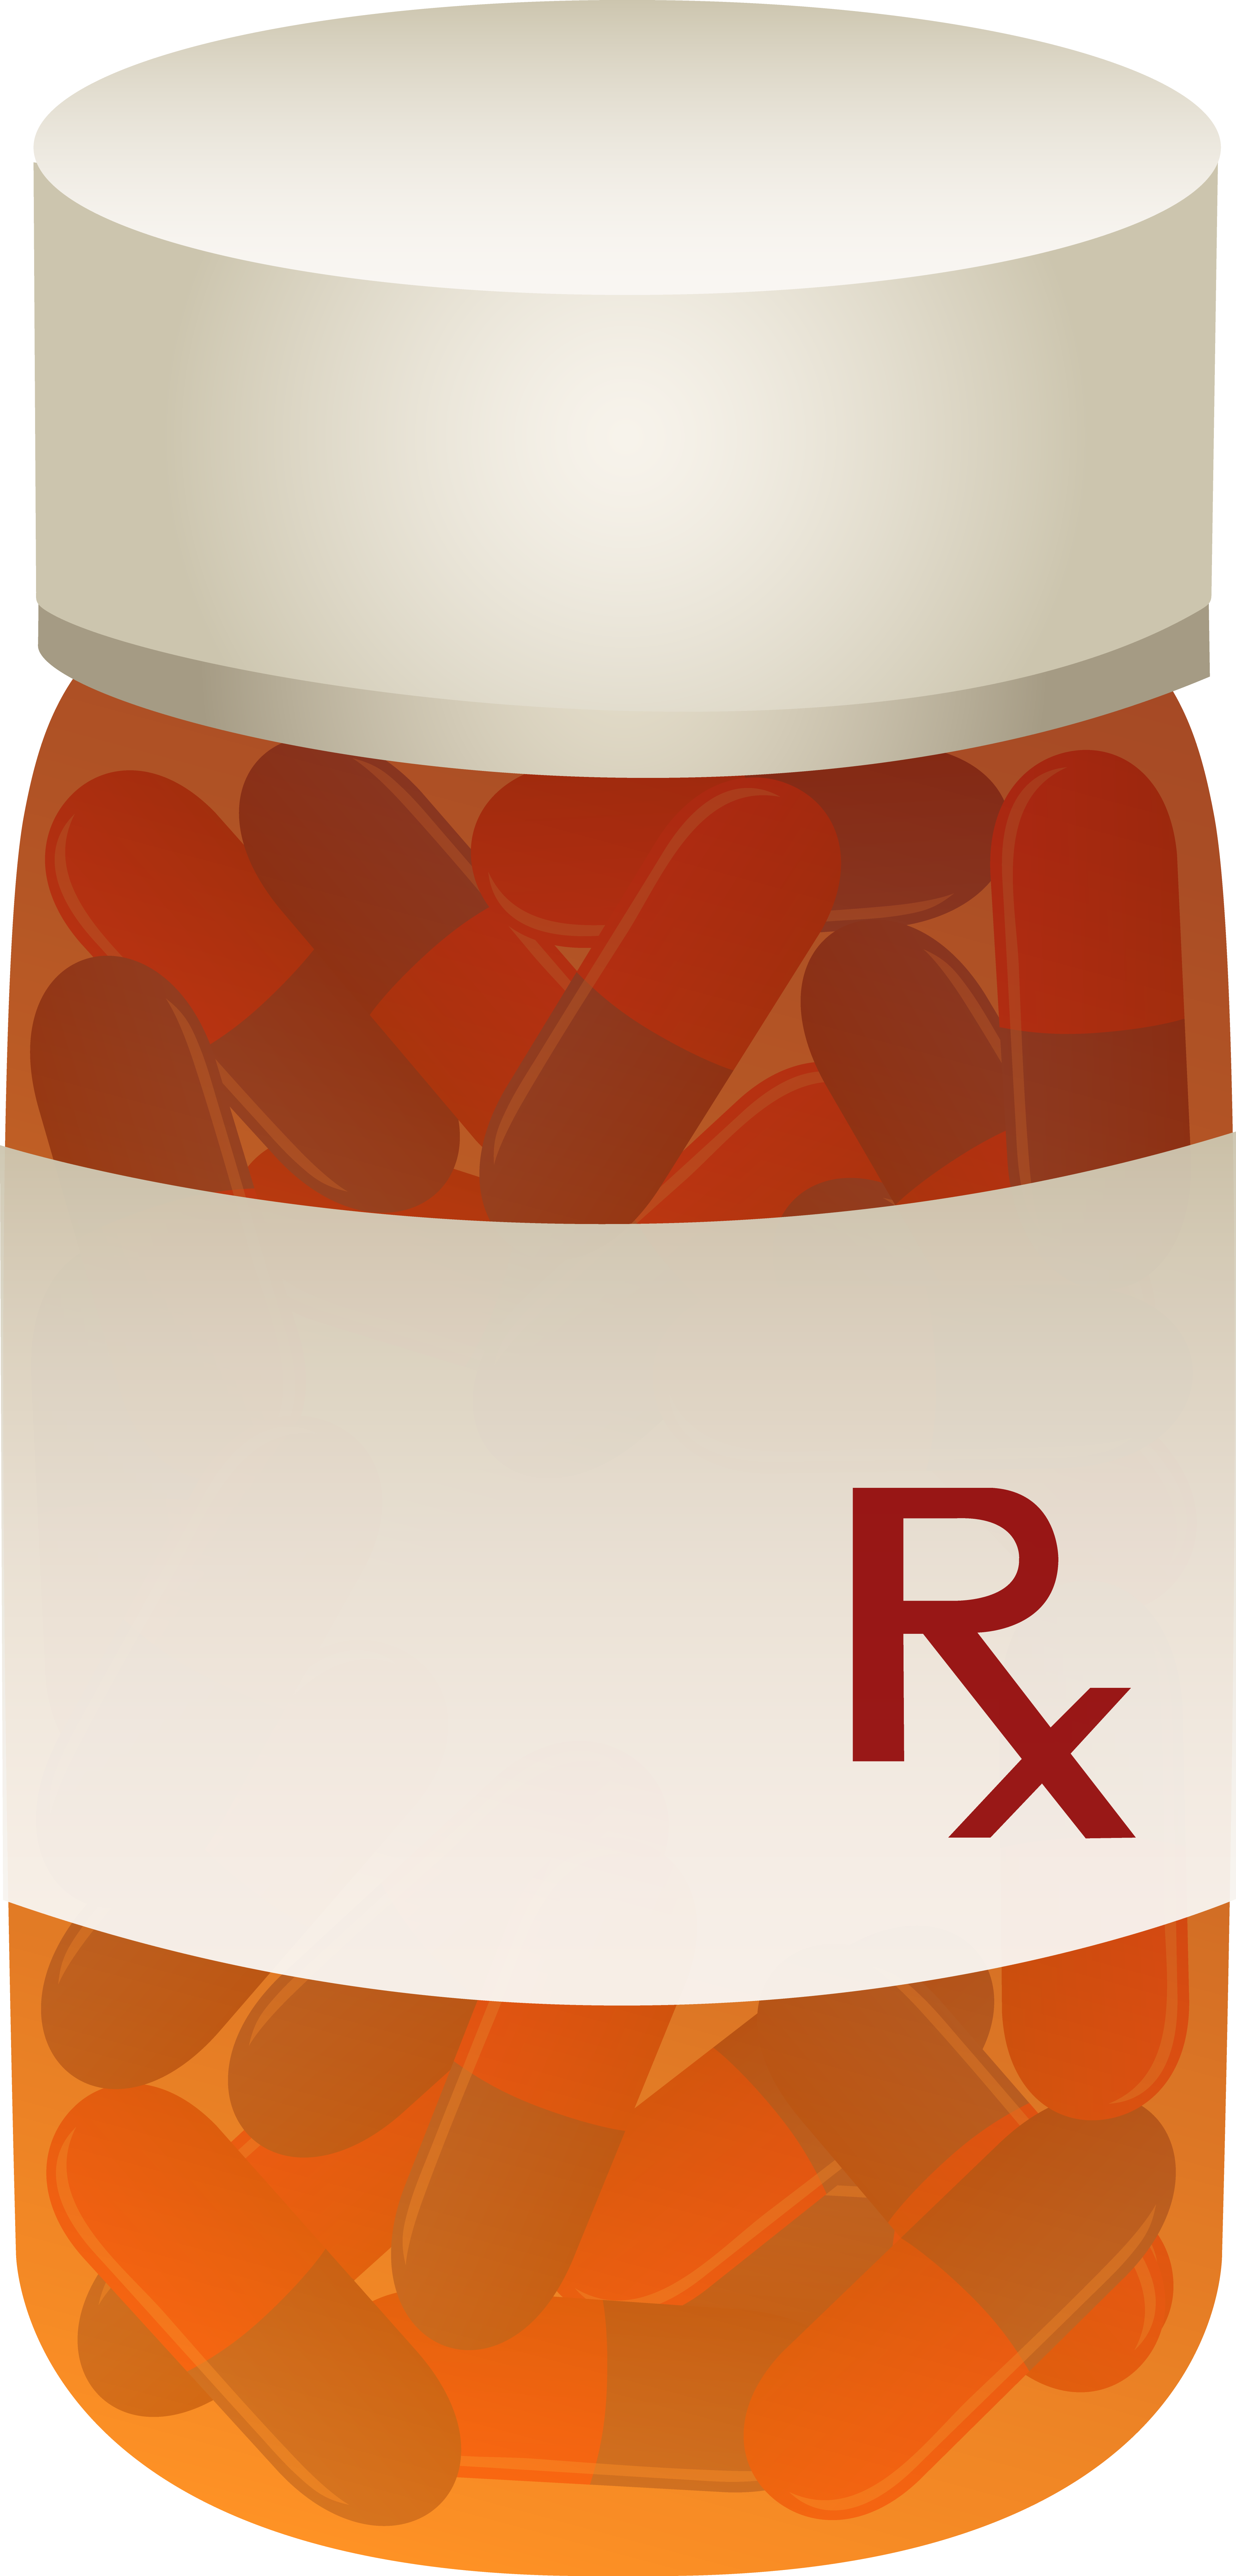 A Close Up Of A Jar Of Pills